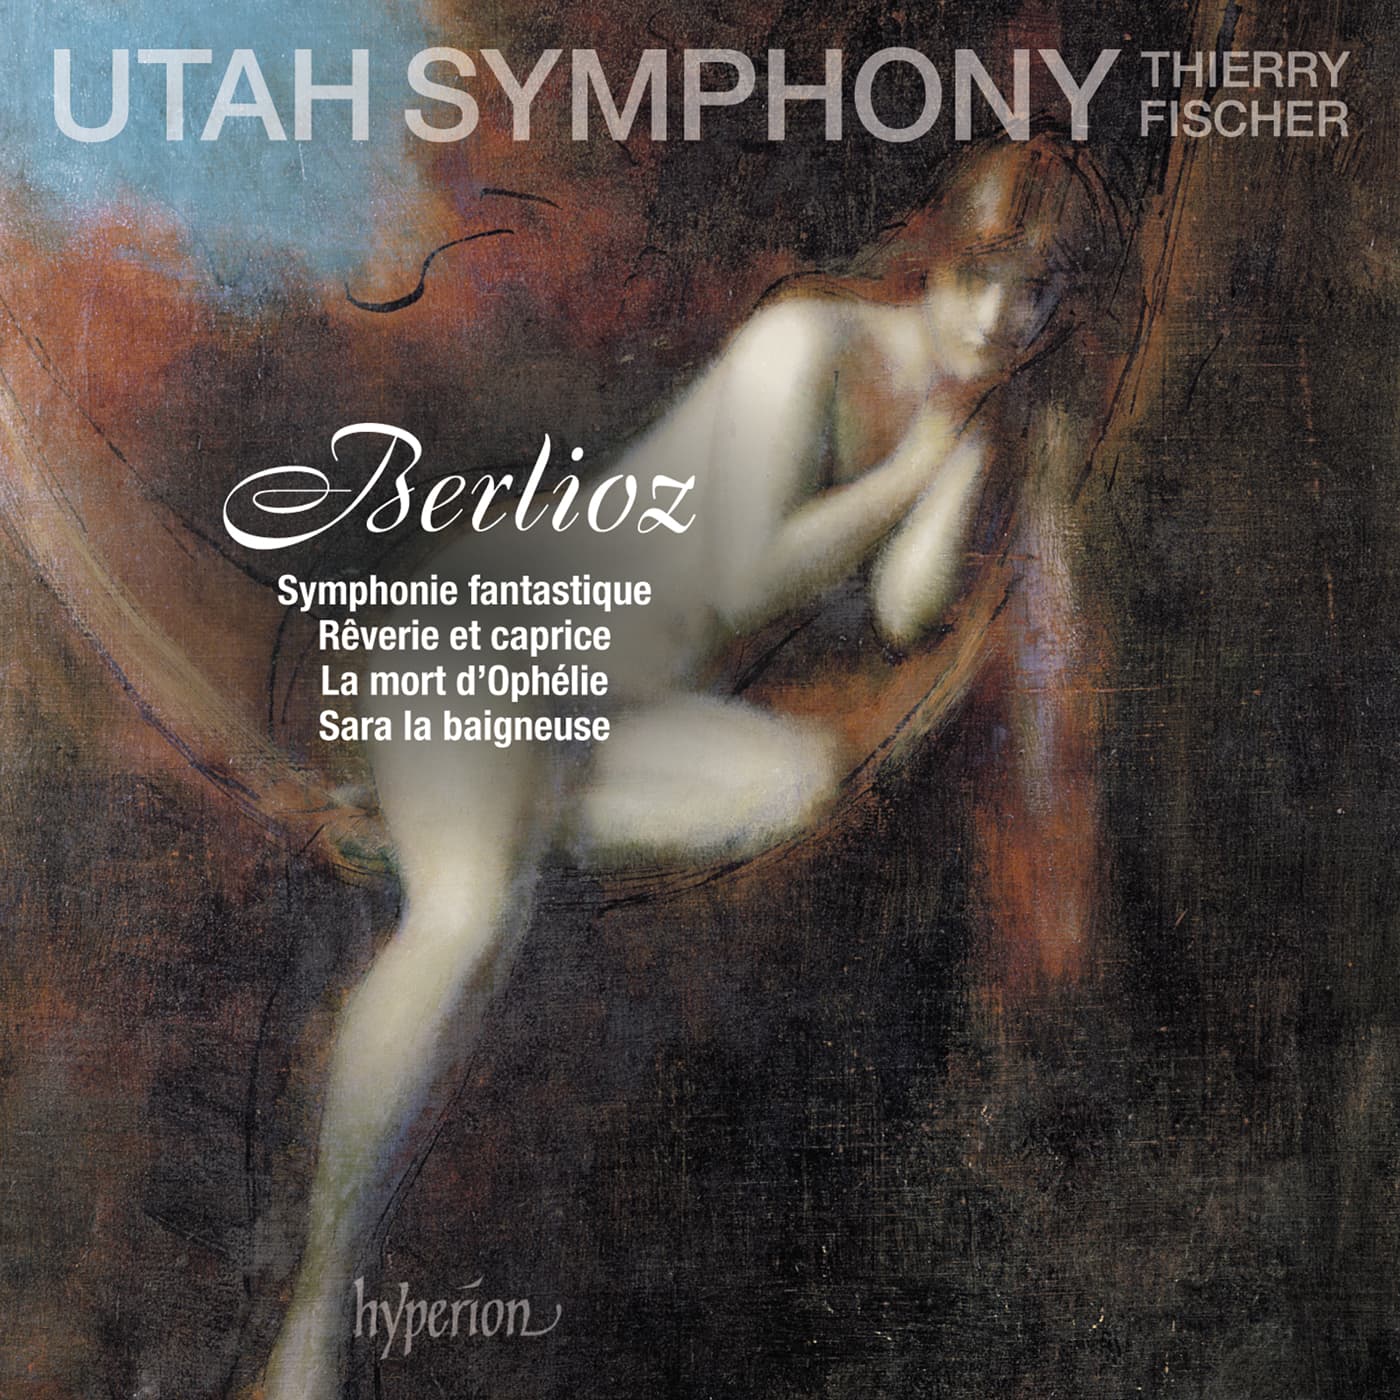 Berlioz: Symphonie fantastique & other works - Utah Symphony